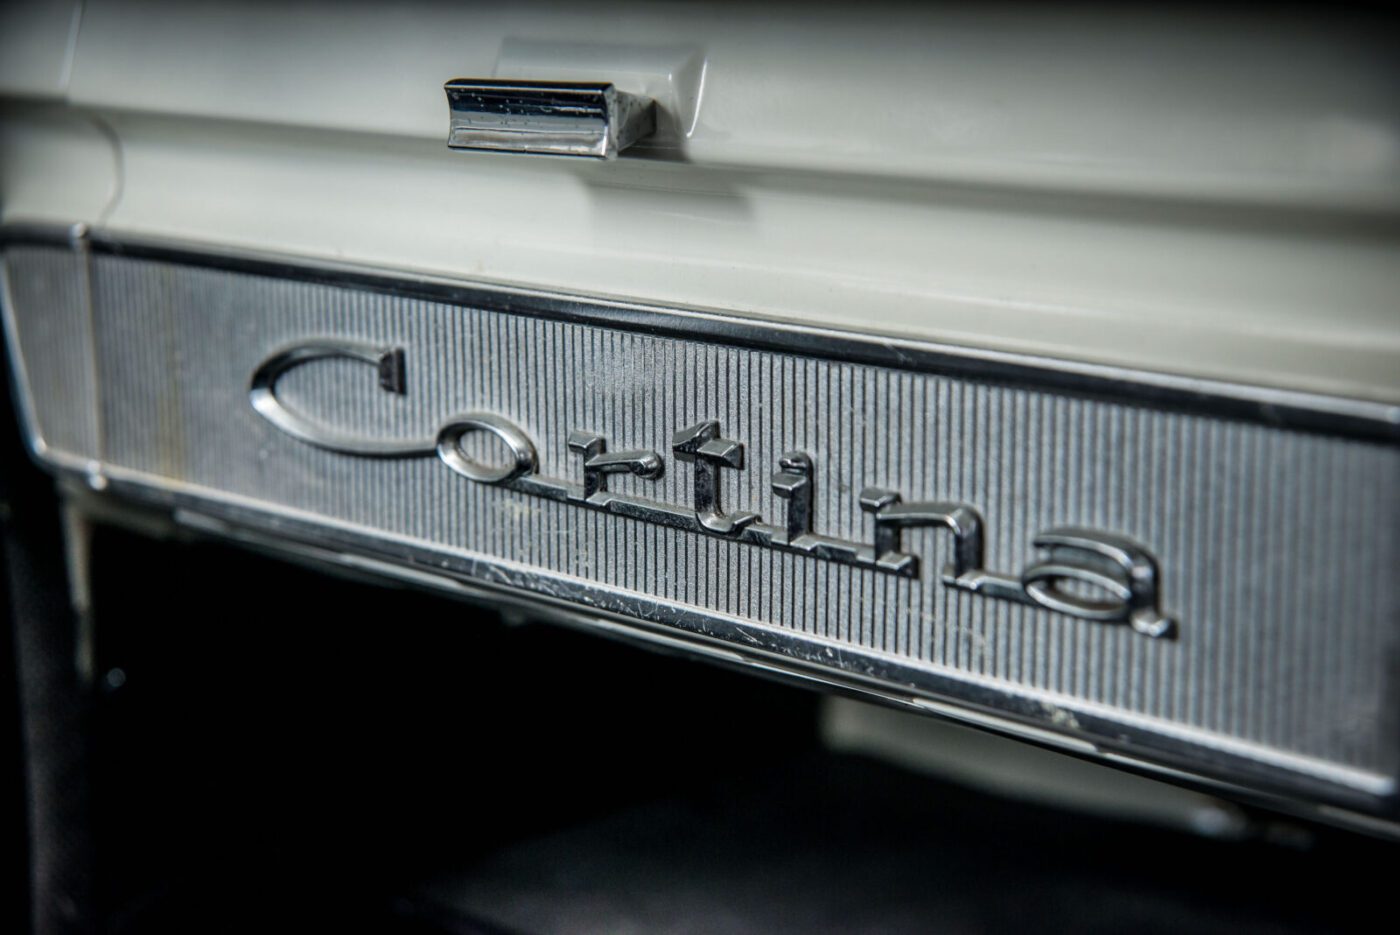 Lotus Cortina interior detail